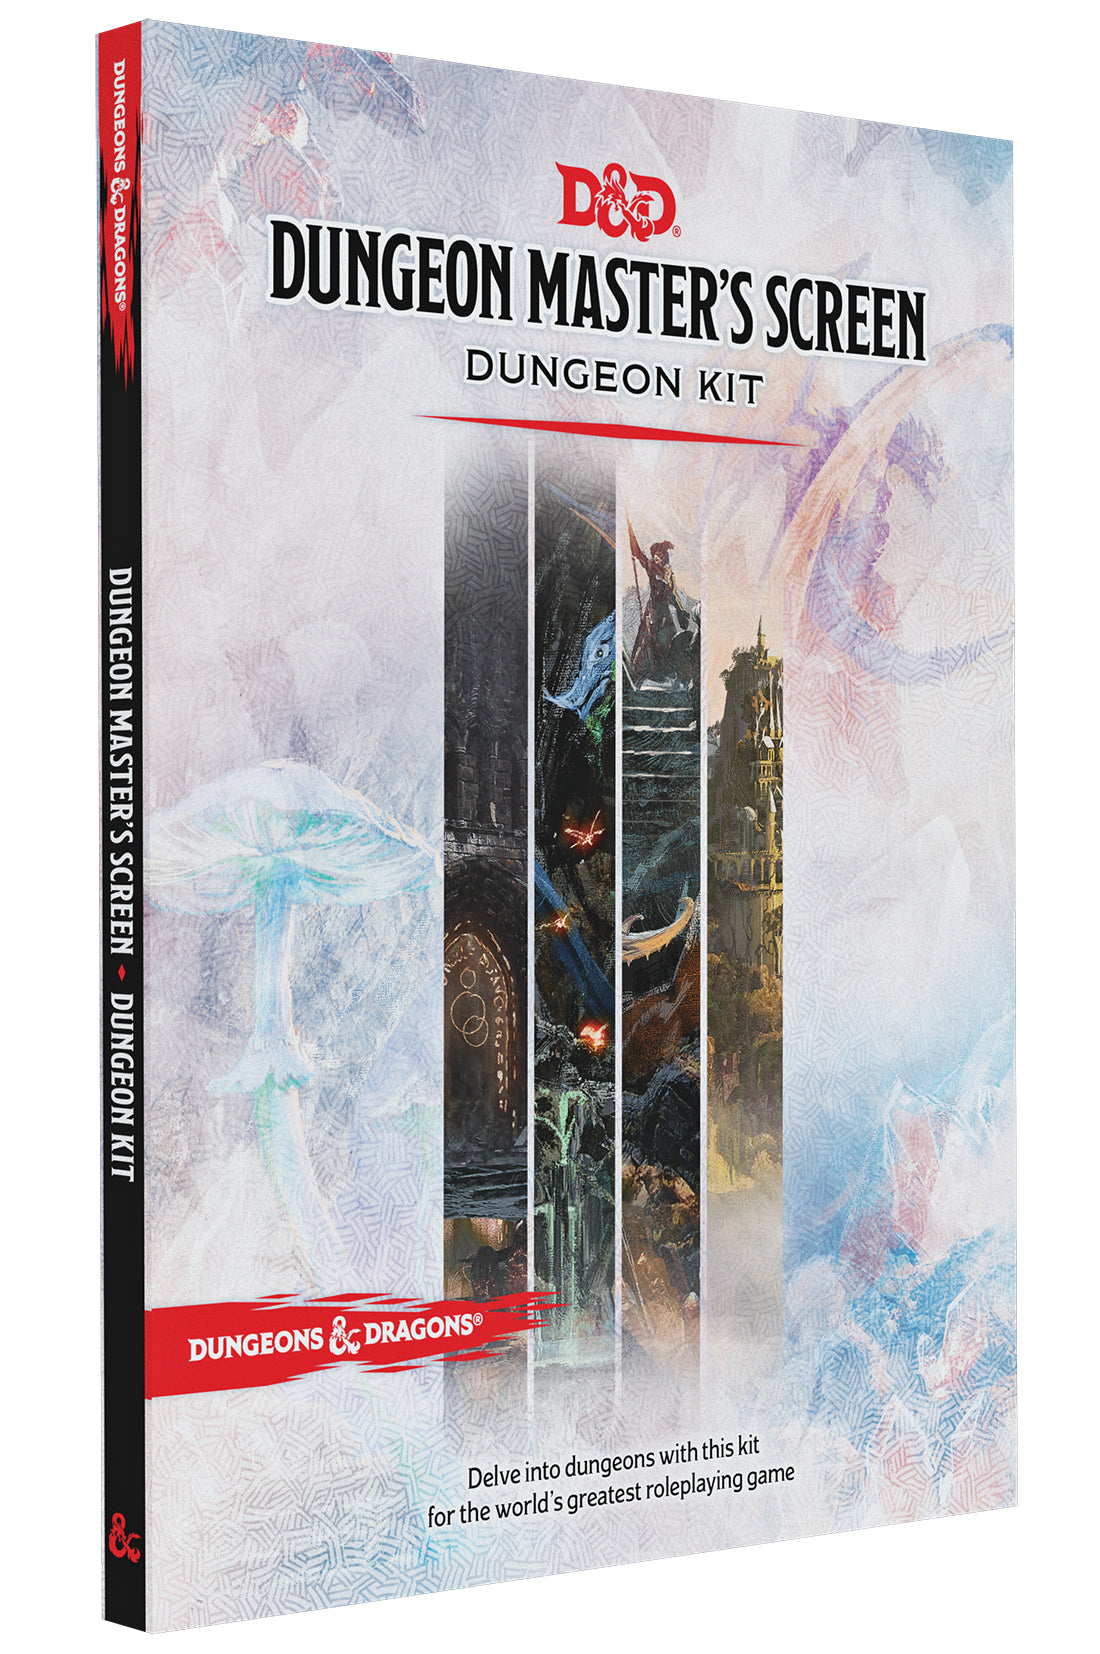 Dungeon Master's Screen: Dungeon Kit